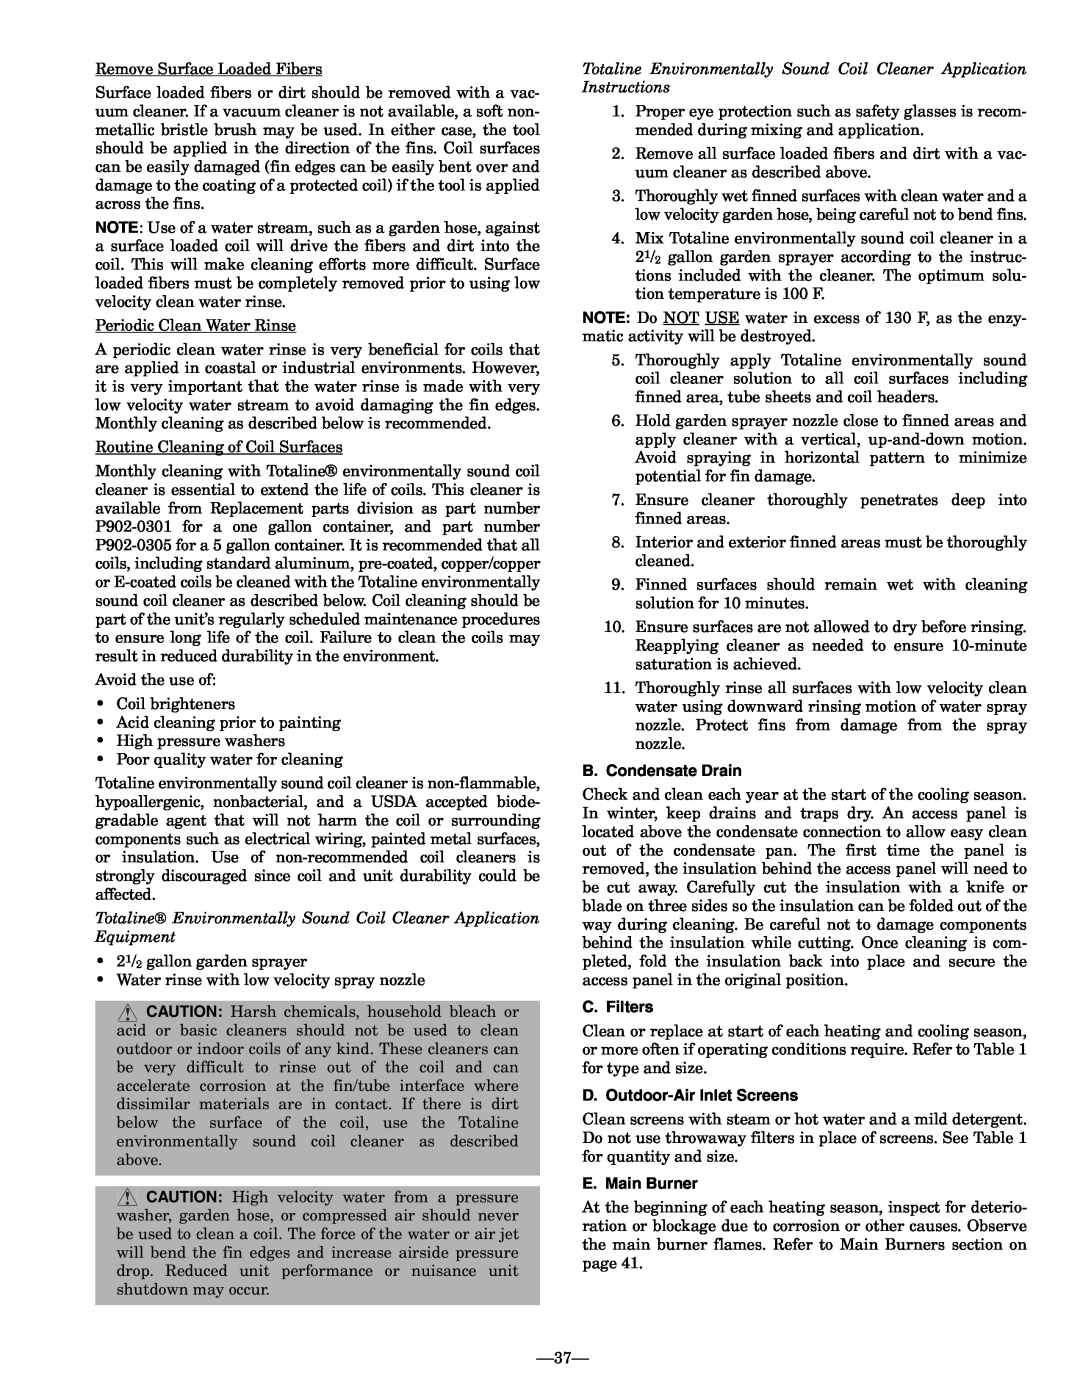 Bryant 581A operation manual B.Condensate Drain, C. Filters, D. Outdoor-AirInlet Screens, E. Main Burner 